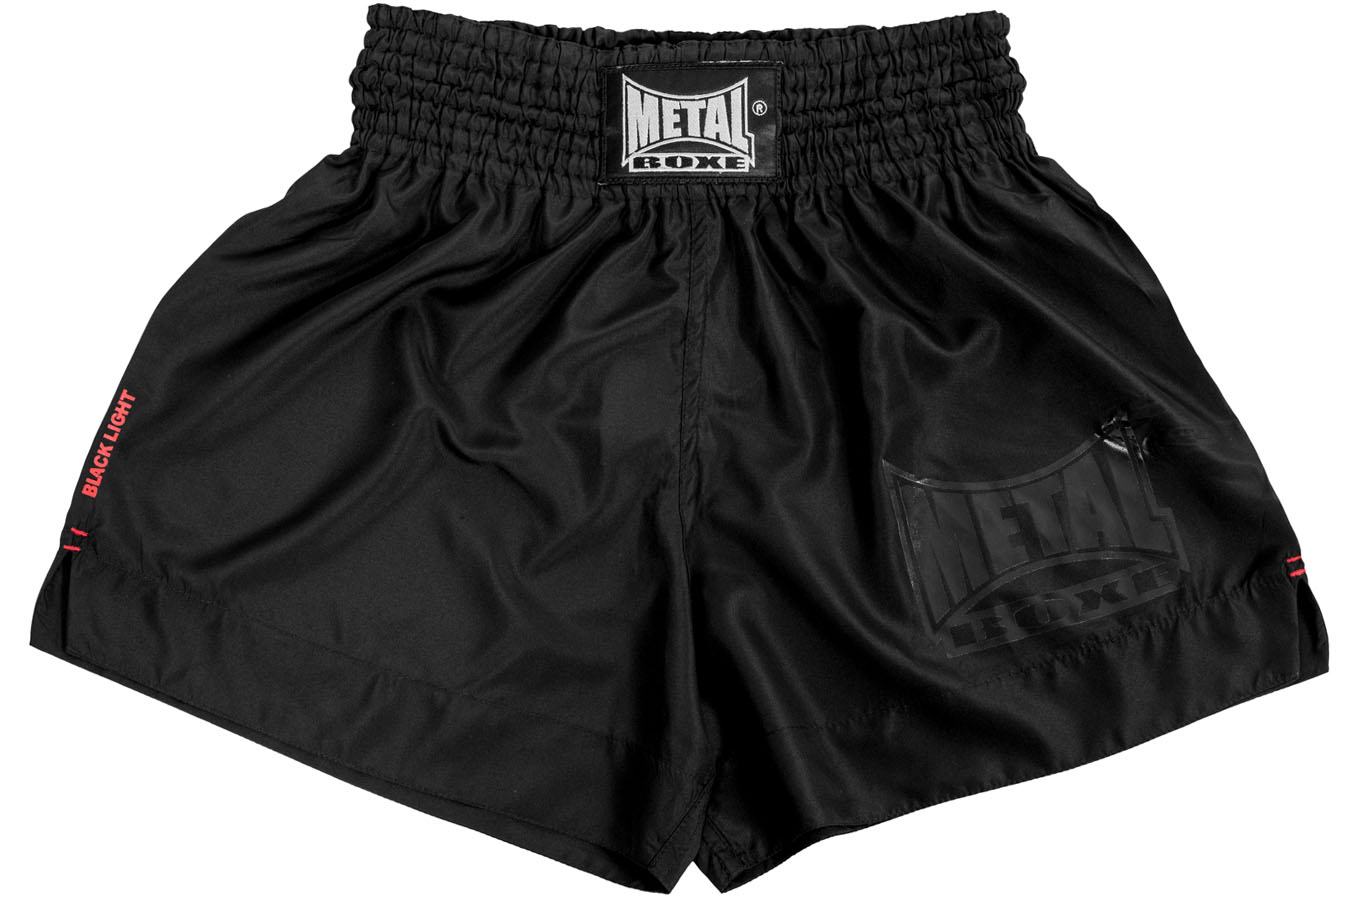 Pantalones cortos de boxeo Thai o Kick, Black light - Metal Boxe -